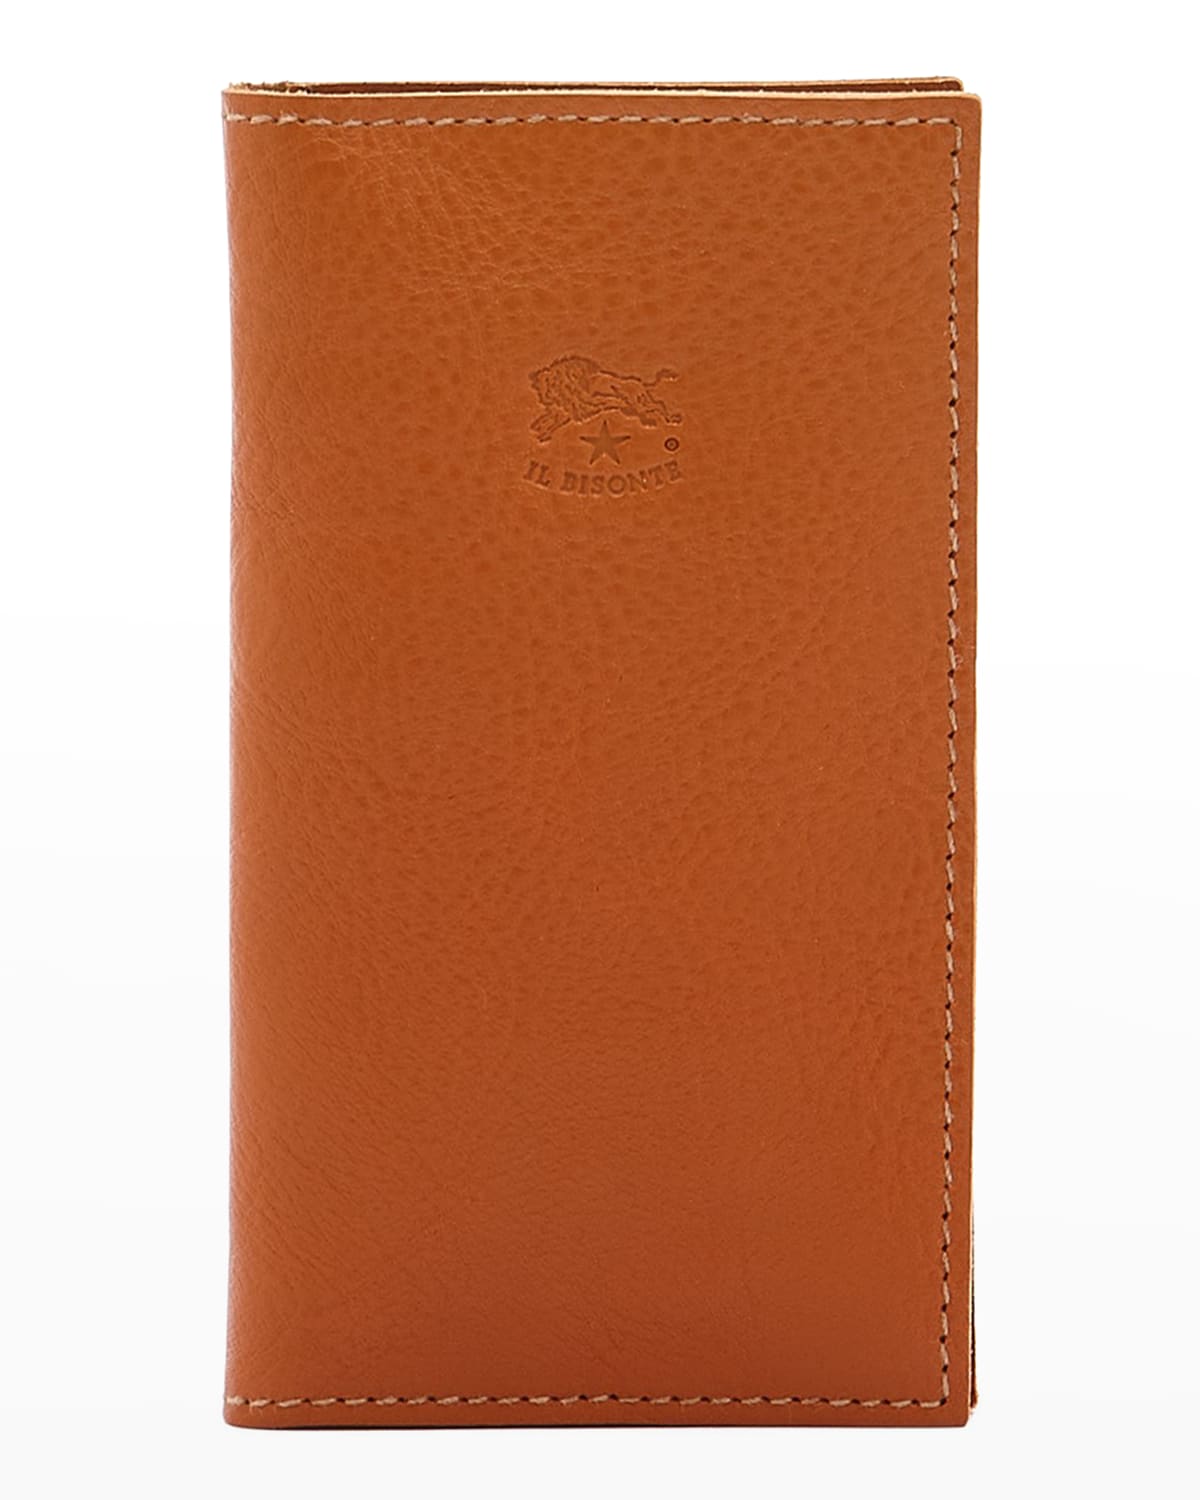 Il Bisonte Acero Flap Leather Card Holder In Caramel